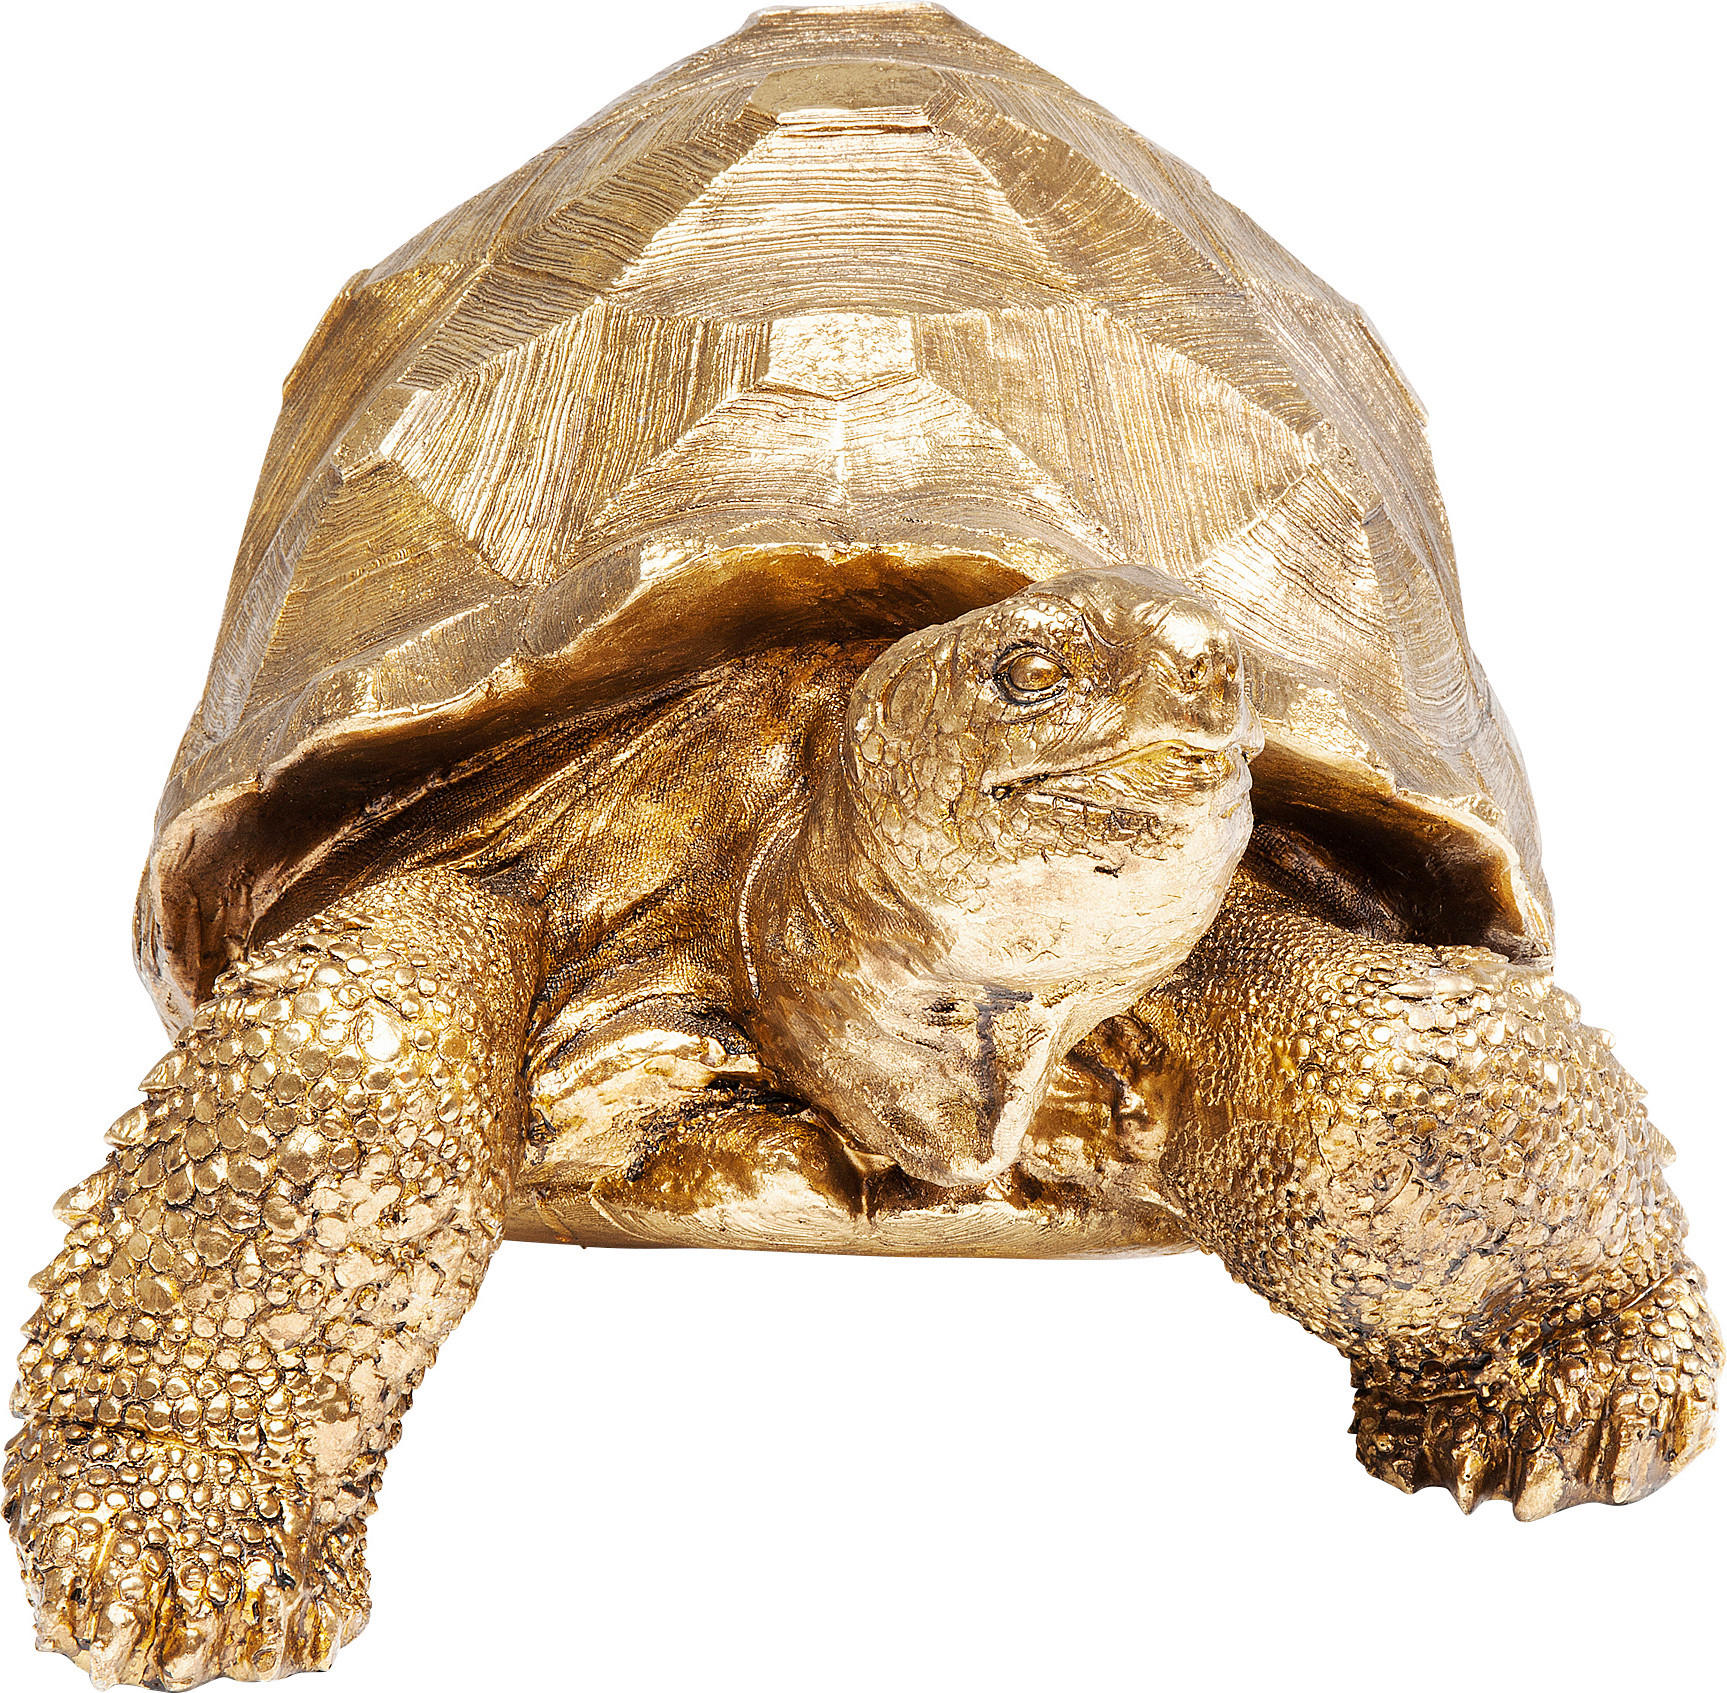 Turtle отзывы. Kare Design черепаха. Статуэтка Turtle Kare k221279. Коллекция черепашек. Грифовая черепаха фигурка.